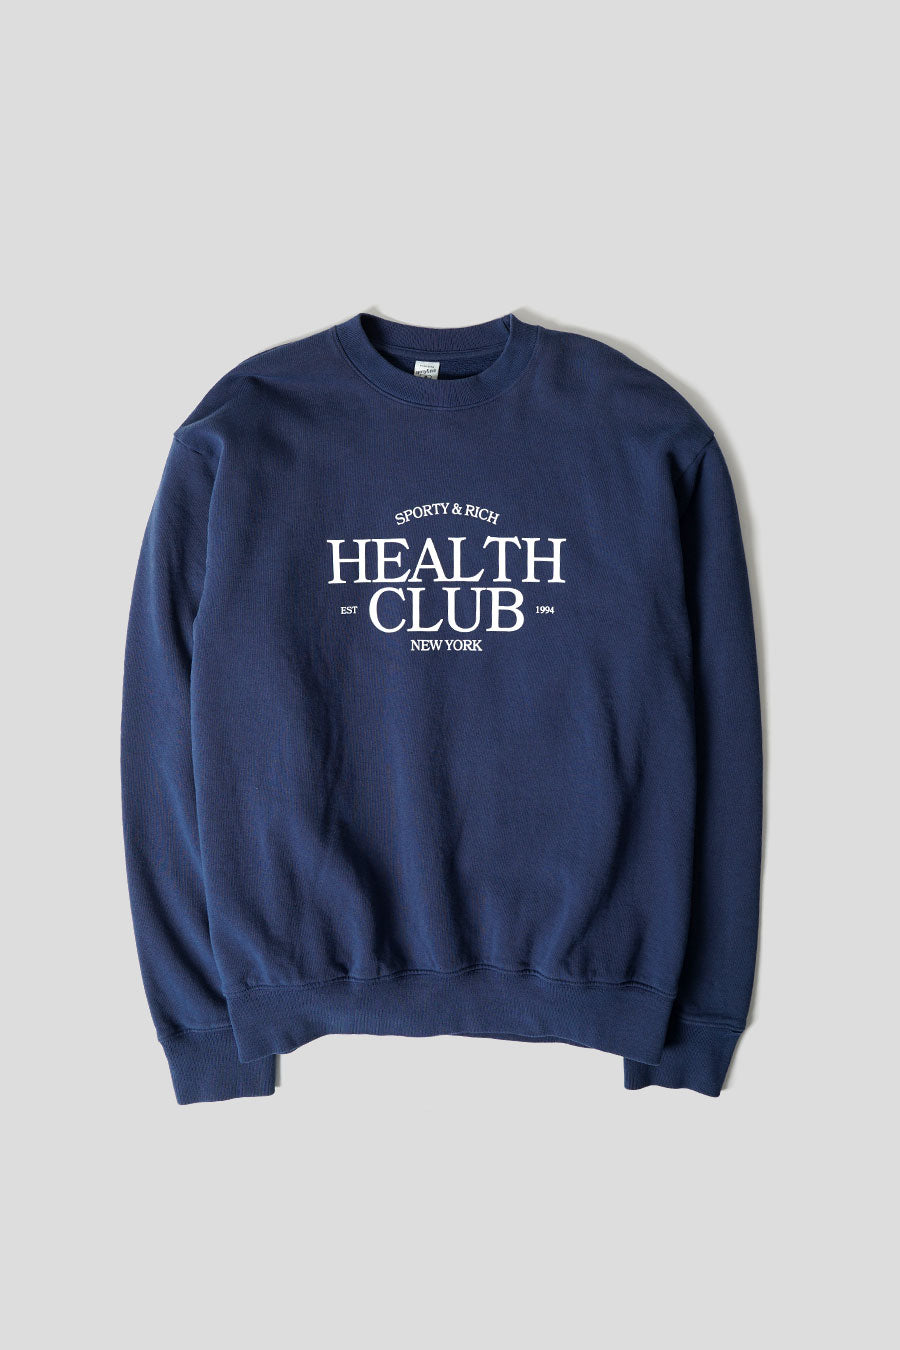 Sporty & Rich - CREWNECK HEALTH CLUB NAVY BLUE - LE LABO STORE